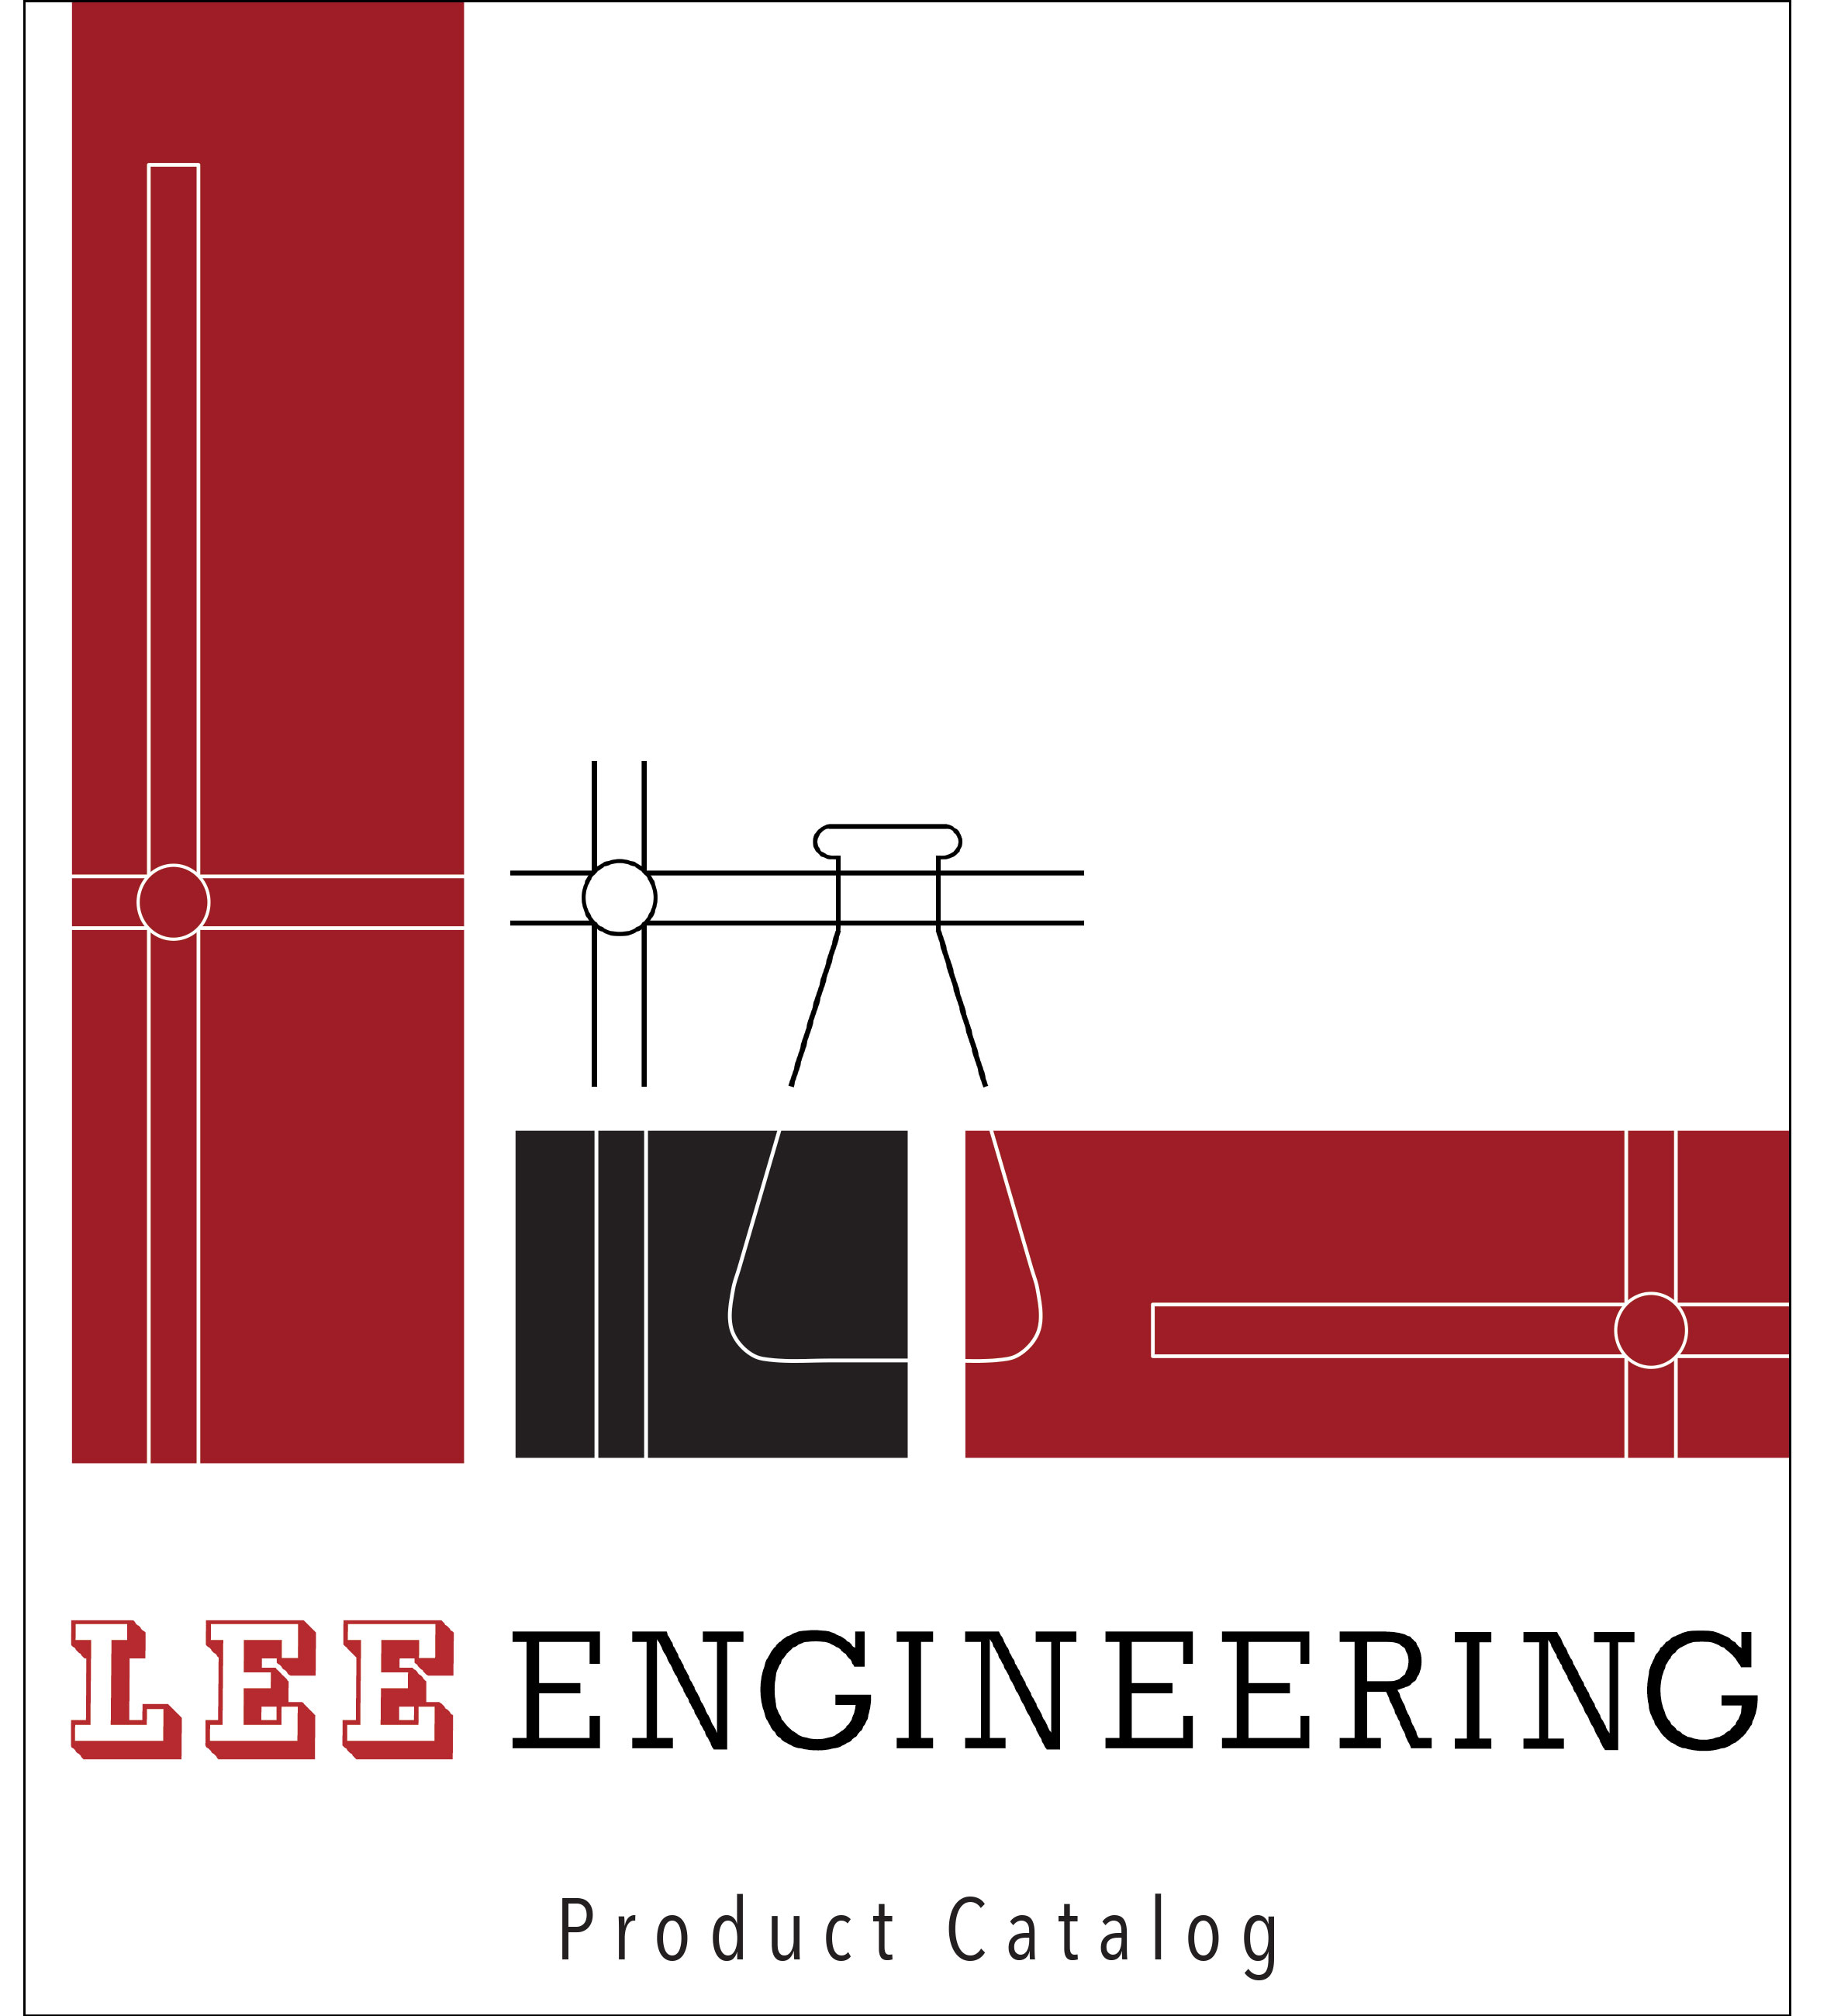 Lee Engineering Product Catalog